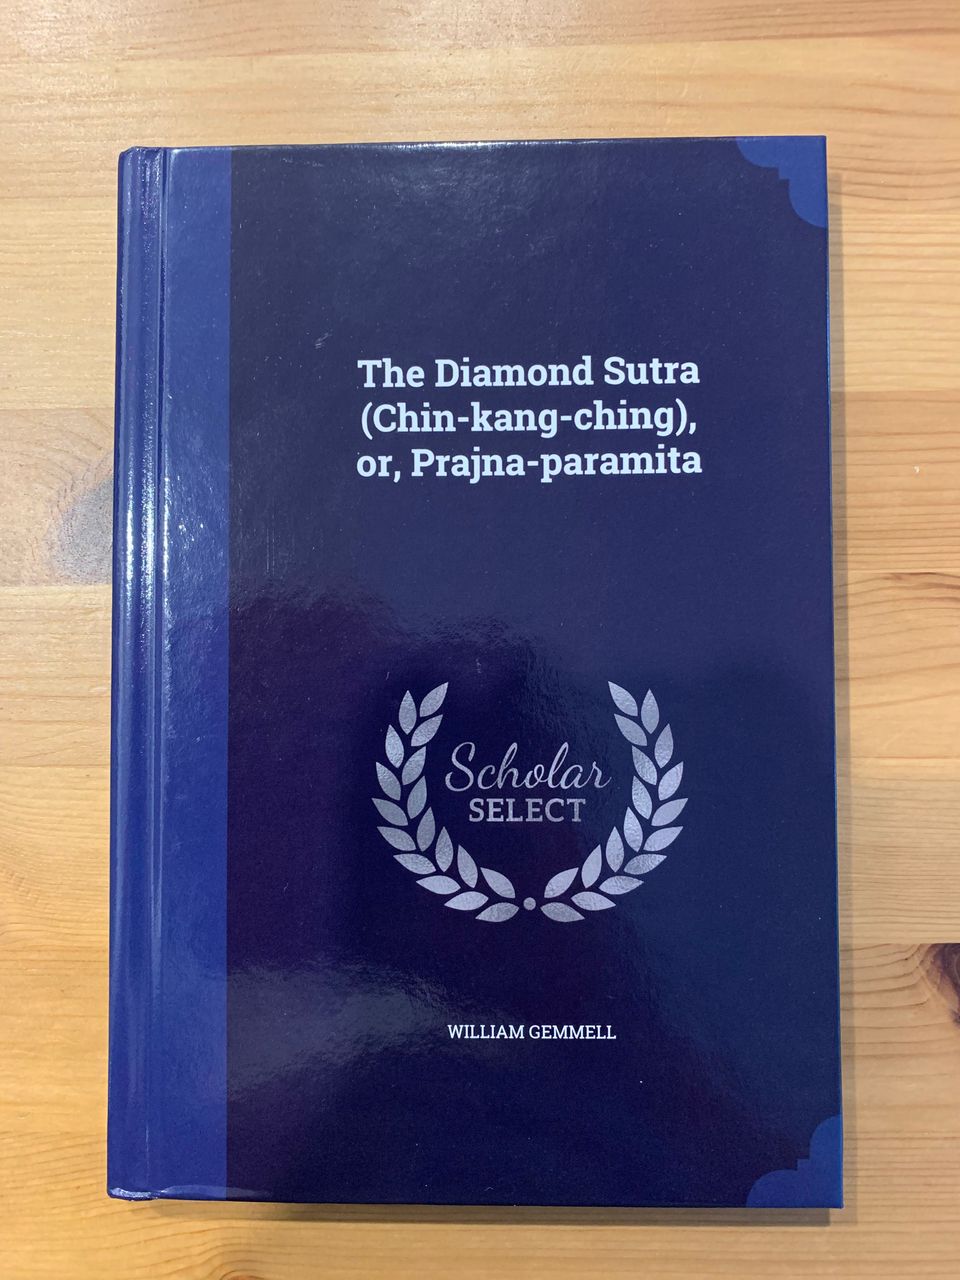 The Diamond Sutra (Chin-kang-Ching), or, Prajna-paramita